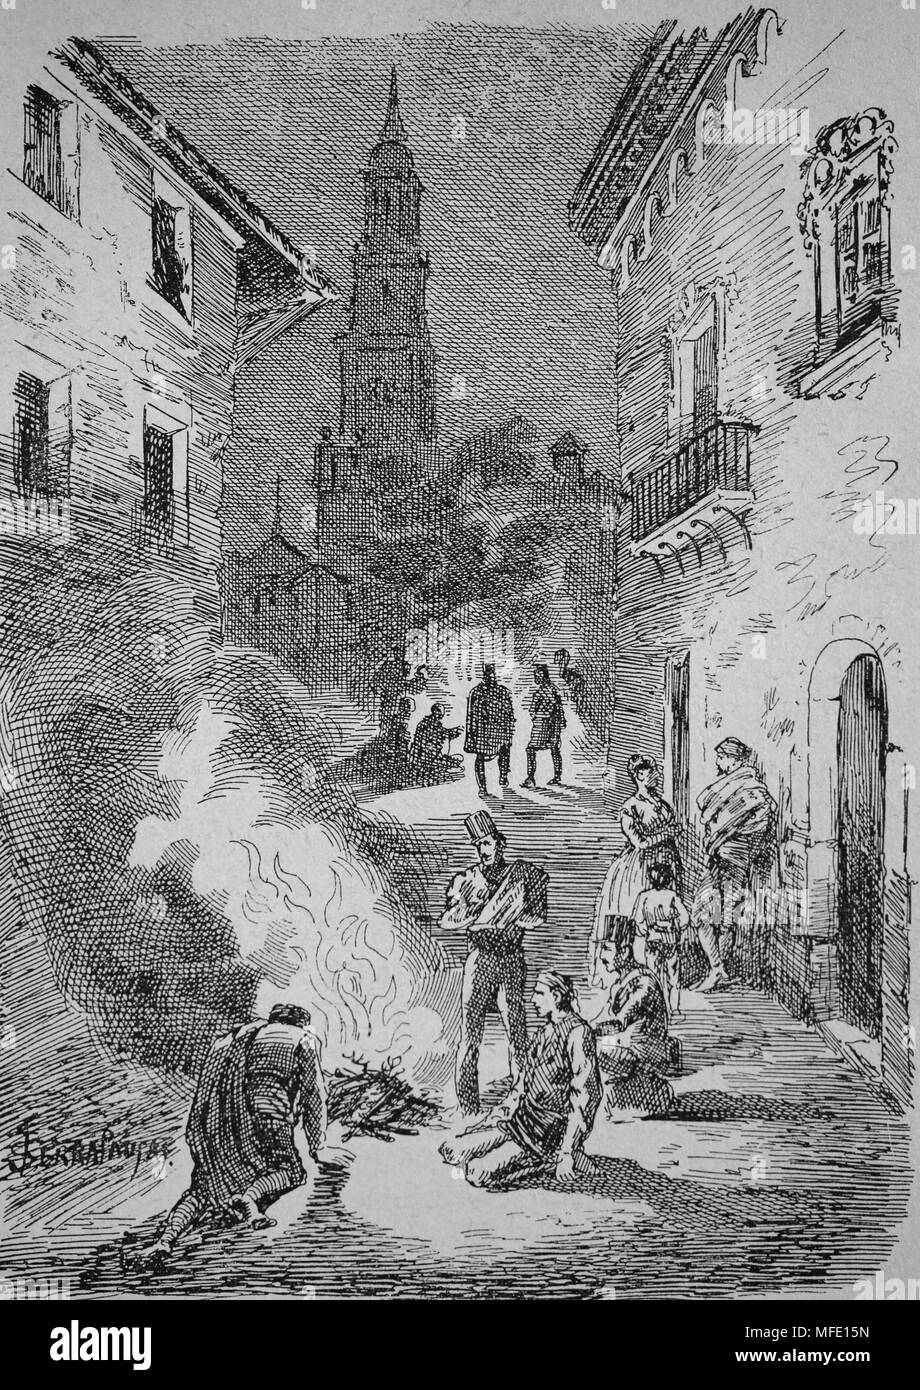 First Siege of Zaragoza. Peninsular War (1807-1814). City street during the site. Engraving, 19th century. Stock Photo